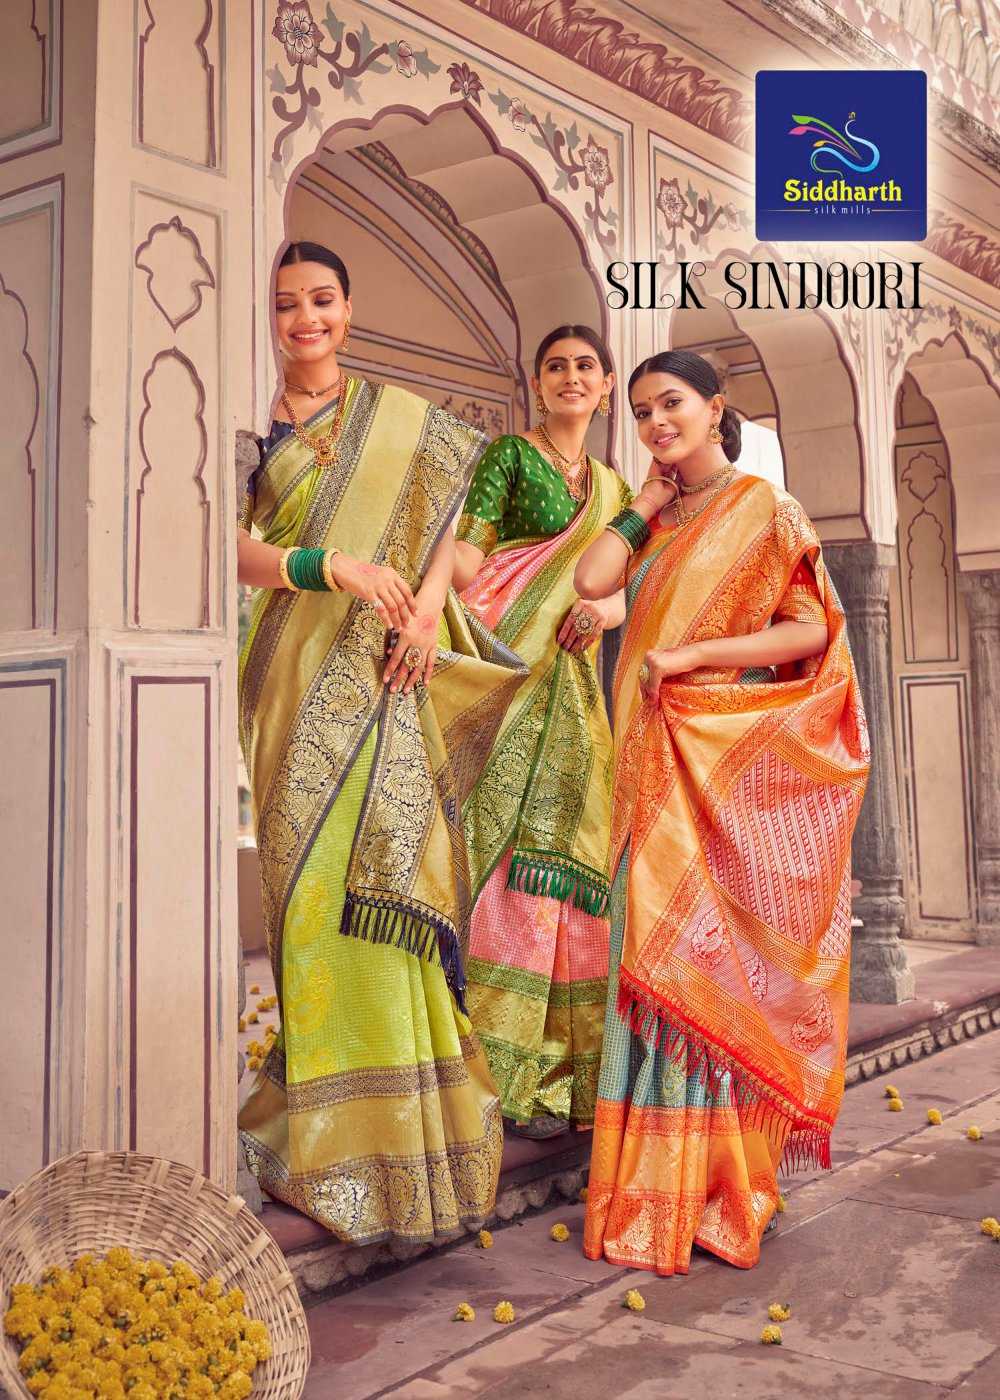 siddharth silk mills silk sindoori beautiful festive wear sarees wholesaler